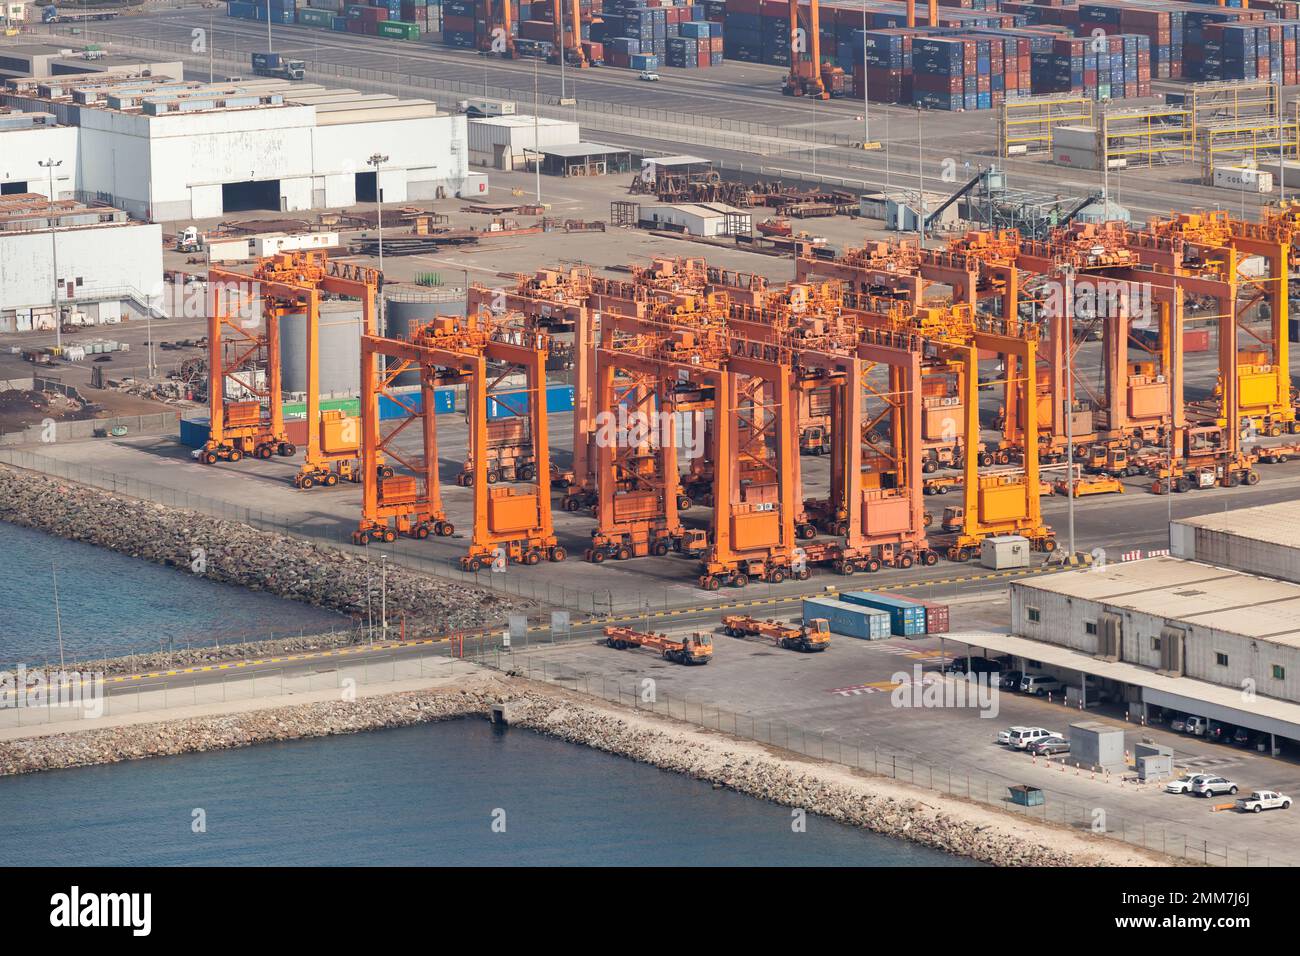 Jeddah, Saudi Arabia - December 22, 2019: Gantry cranes of Jeddah Islamic Seaport Stock Photo